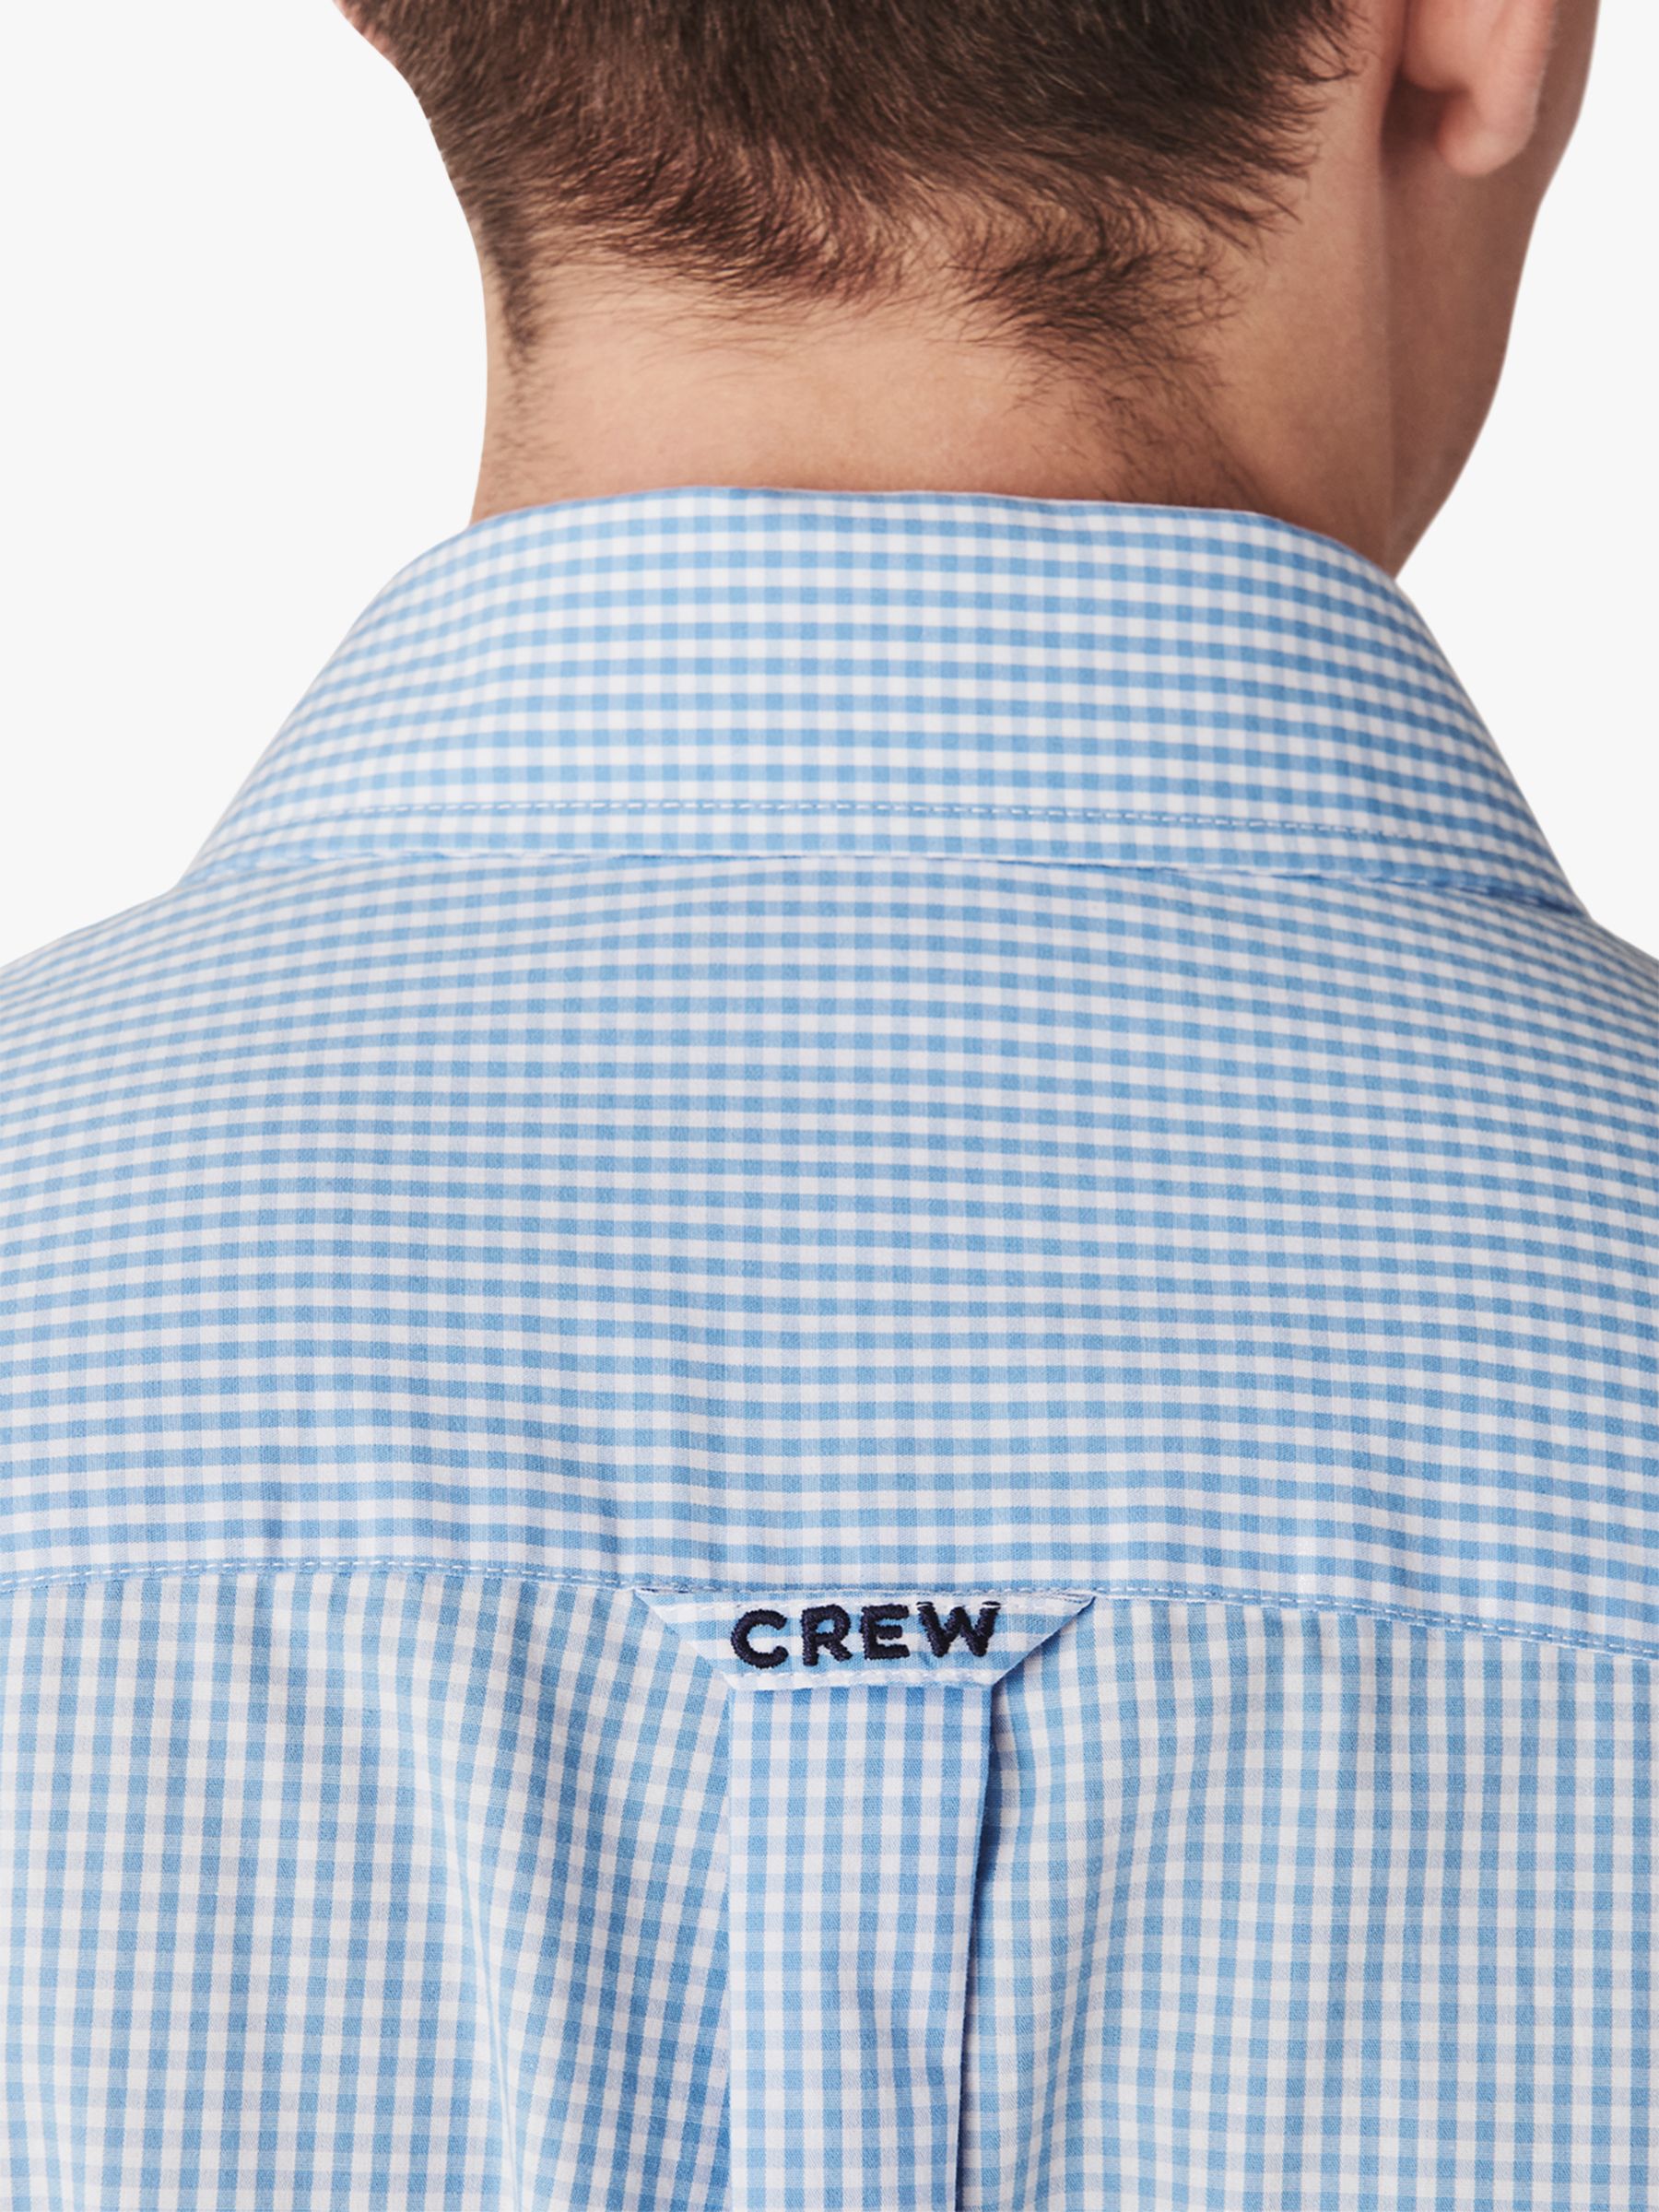 Crew Clothing Classic Micro Gingham Check Shirt, Sky Blue, XS